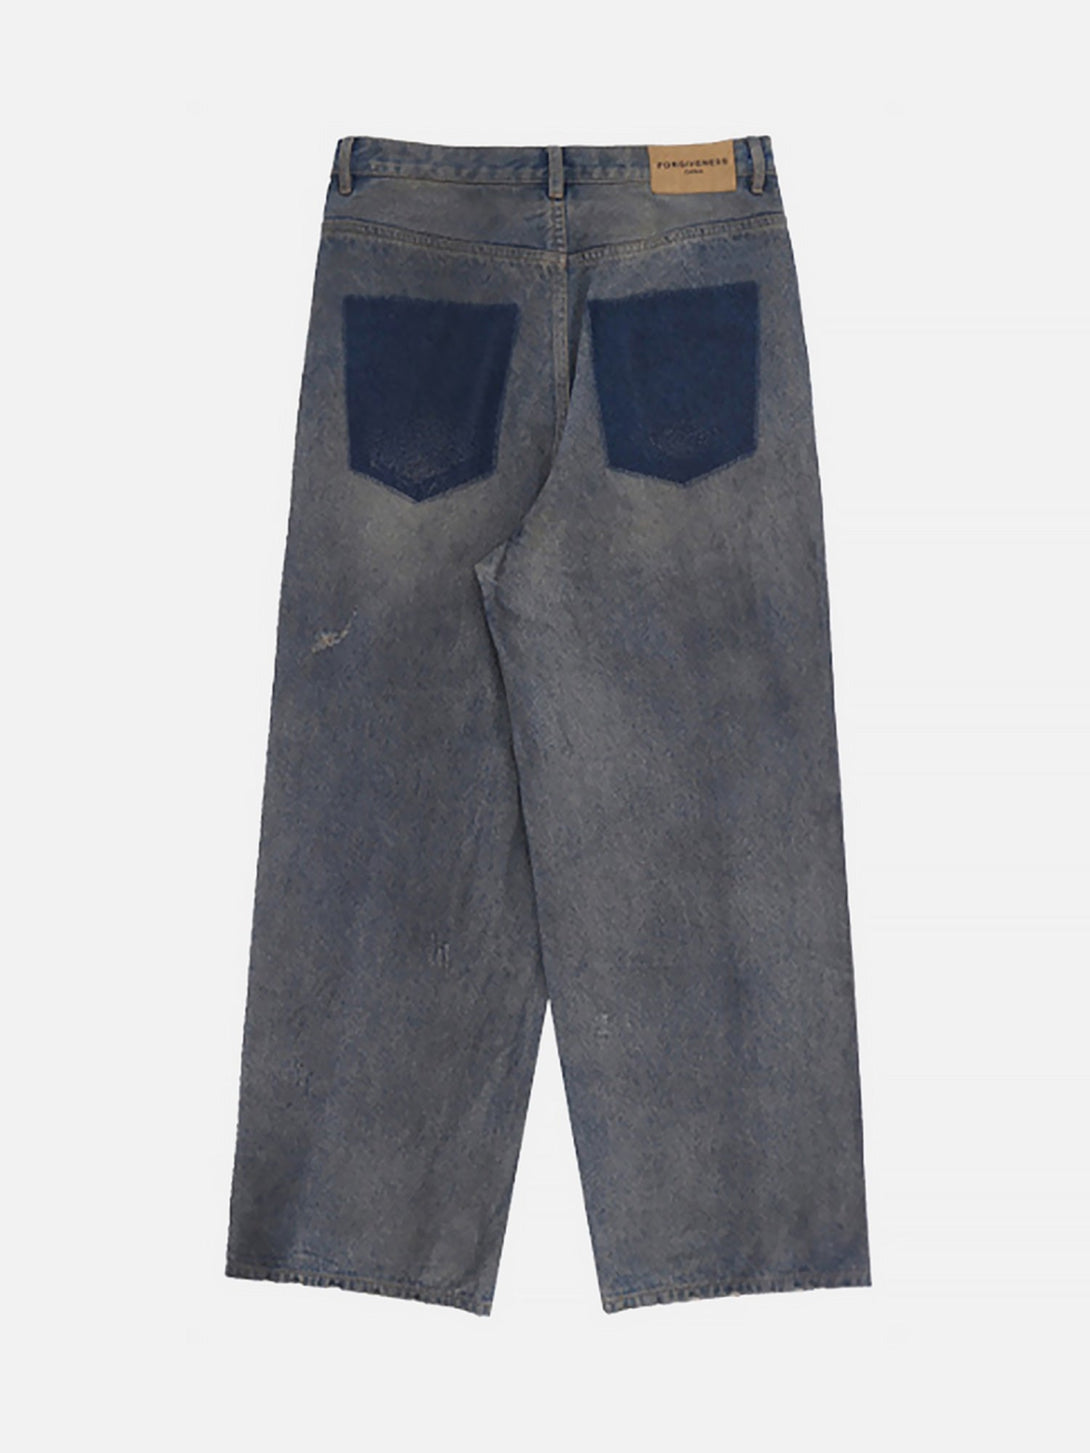 Majesda® - Reverse Pocket Mud Dyed Knife Cut Jeans- Outfit Ideas - Streetwear Fashion - majesda.com